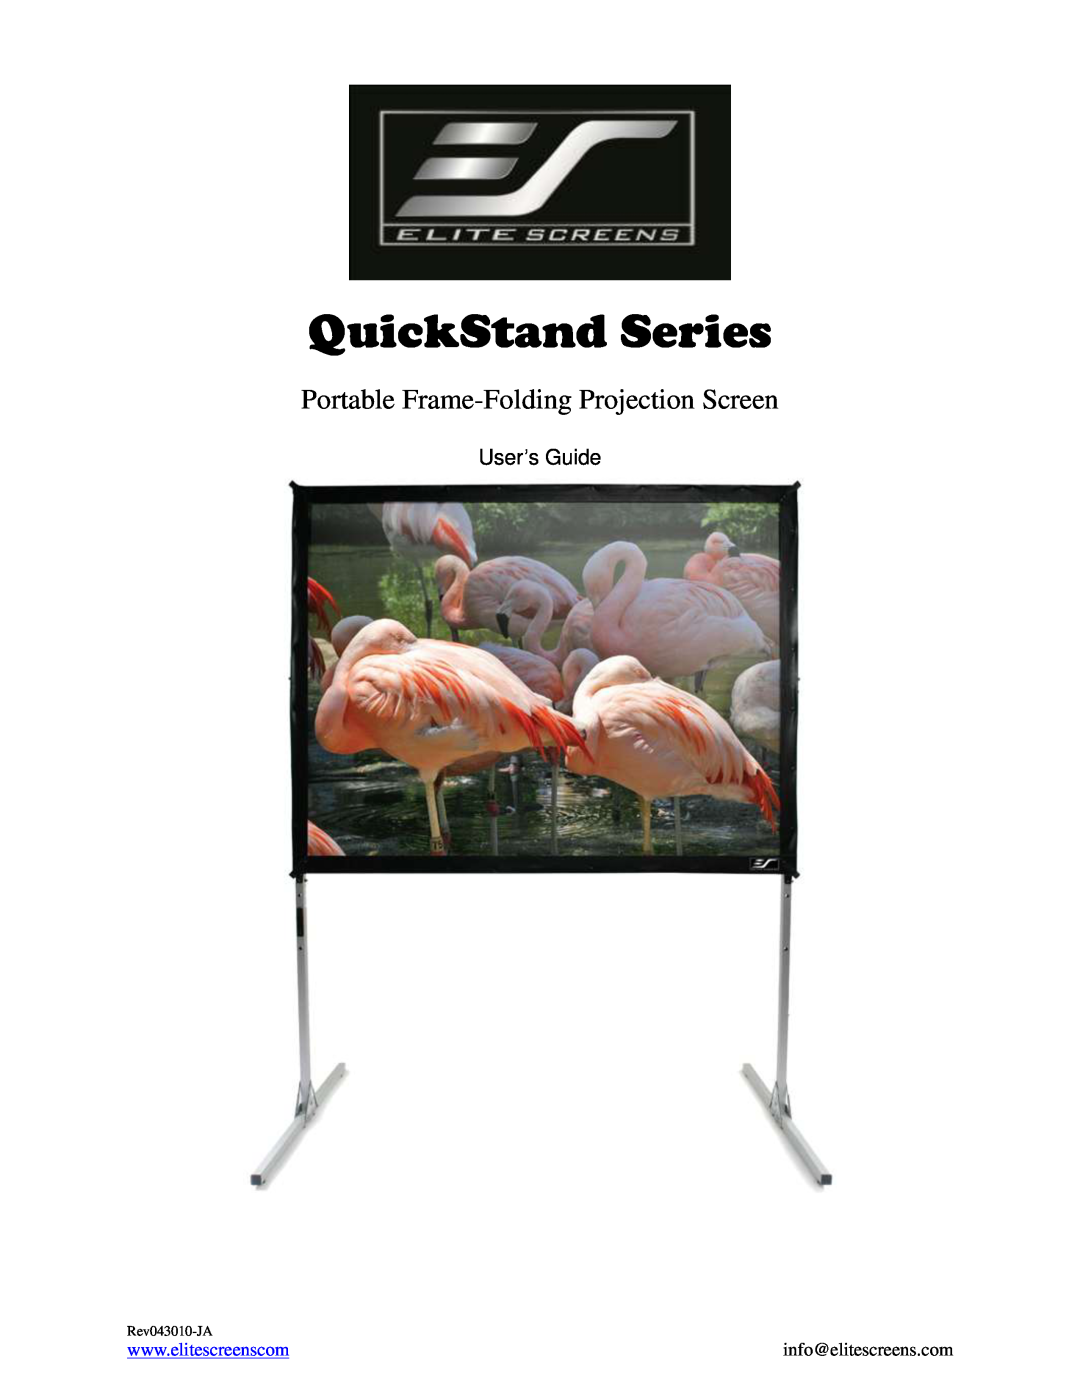 Elite Screens REV043010-JA manual QuickStand Series, Portable Frame-Folding Projection Screen, User’s Guide, Rev043010-JA 